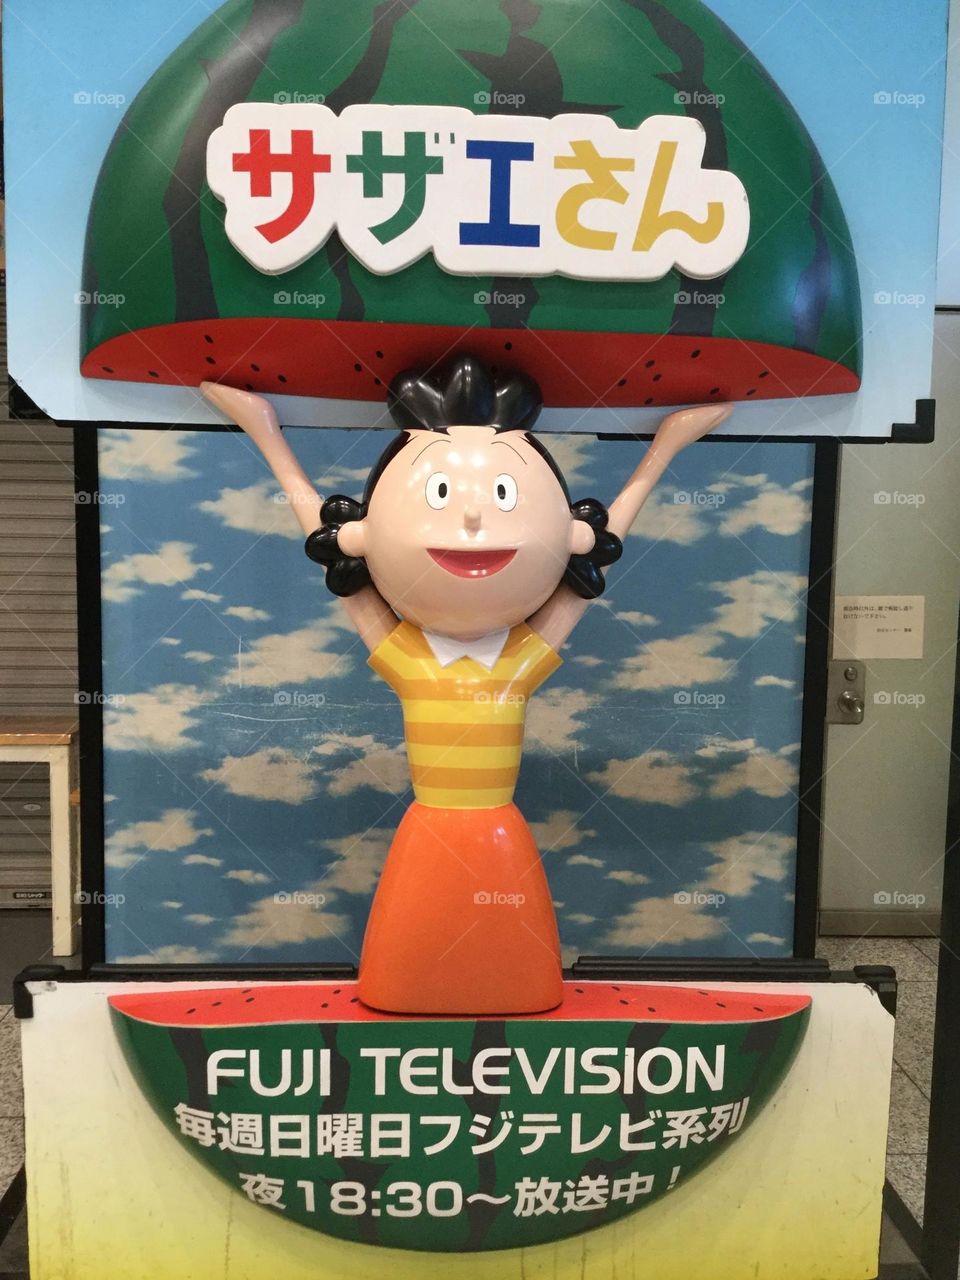 Sazae san character on Fuji tv, Odaiba.